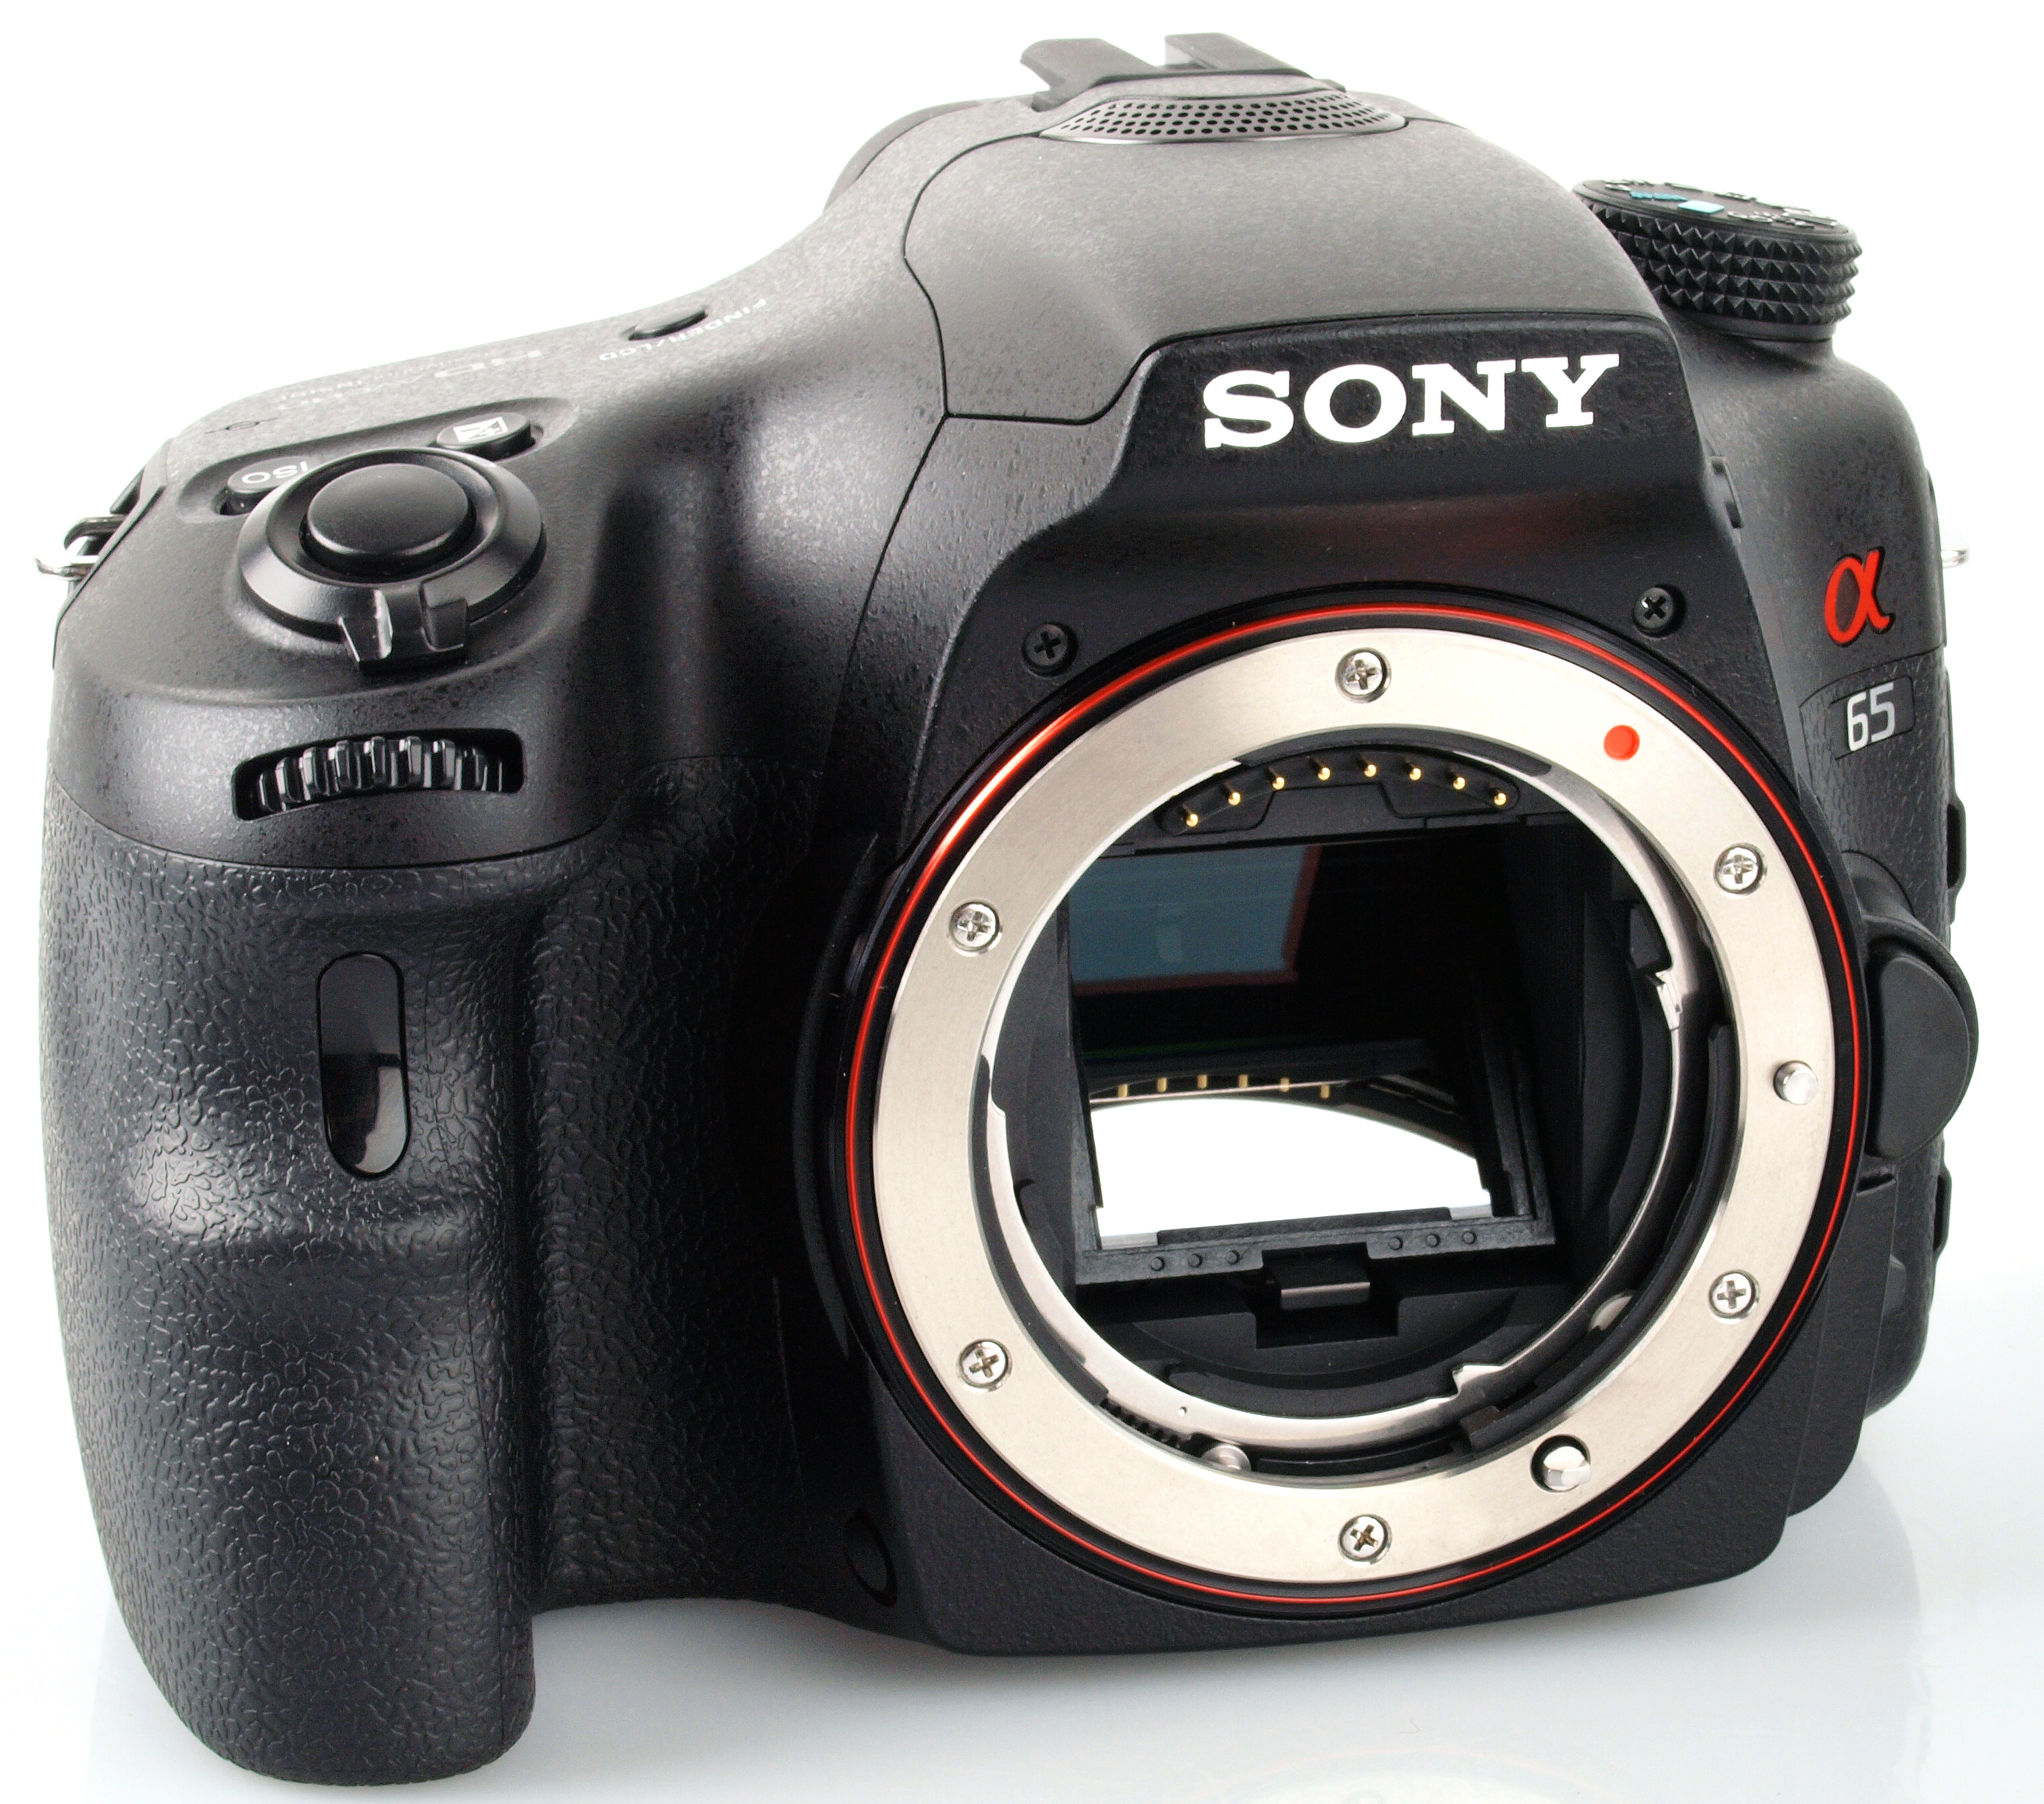 Sony Alpha SLT-A65 Digital Camera